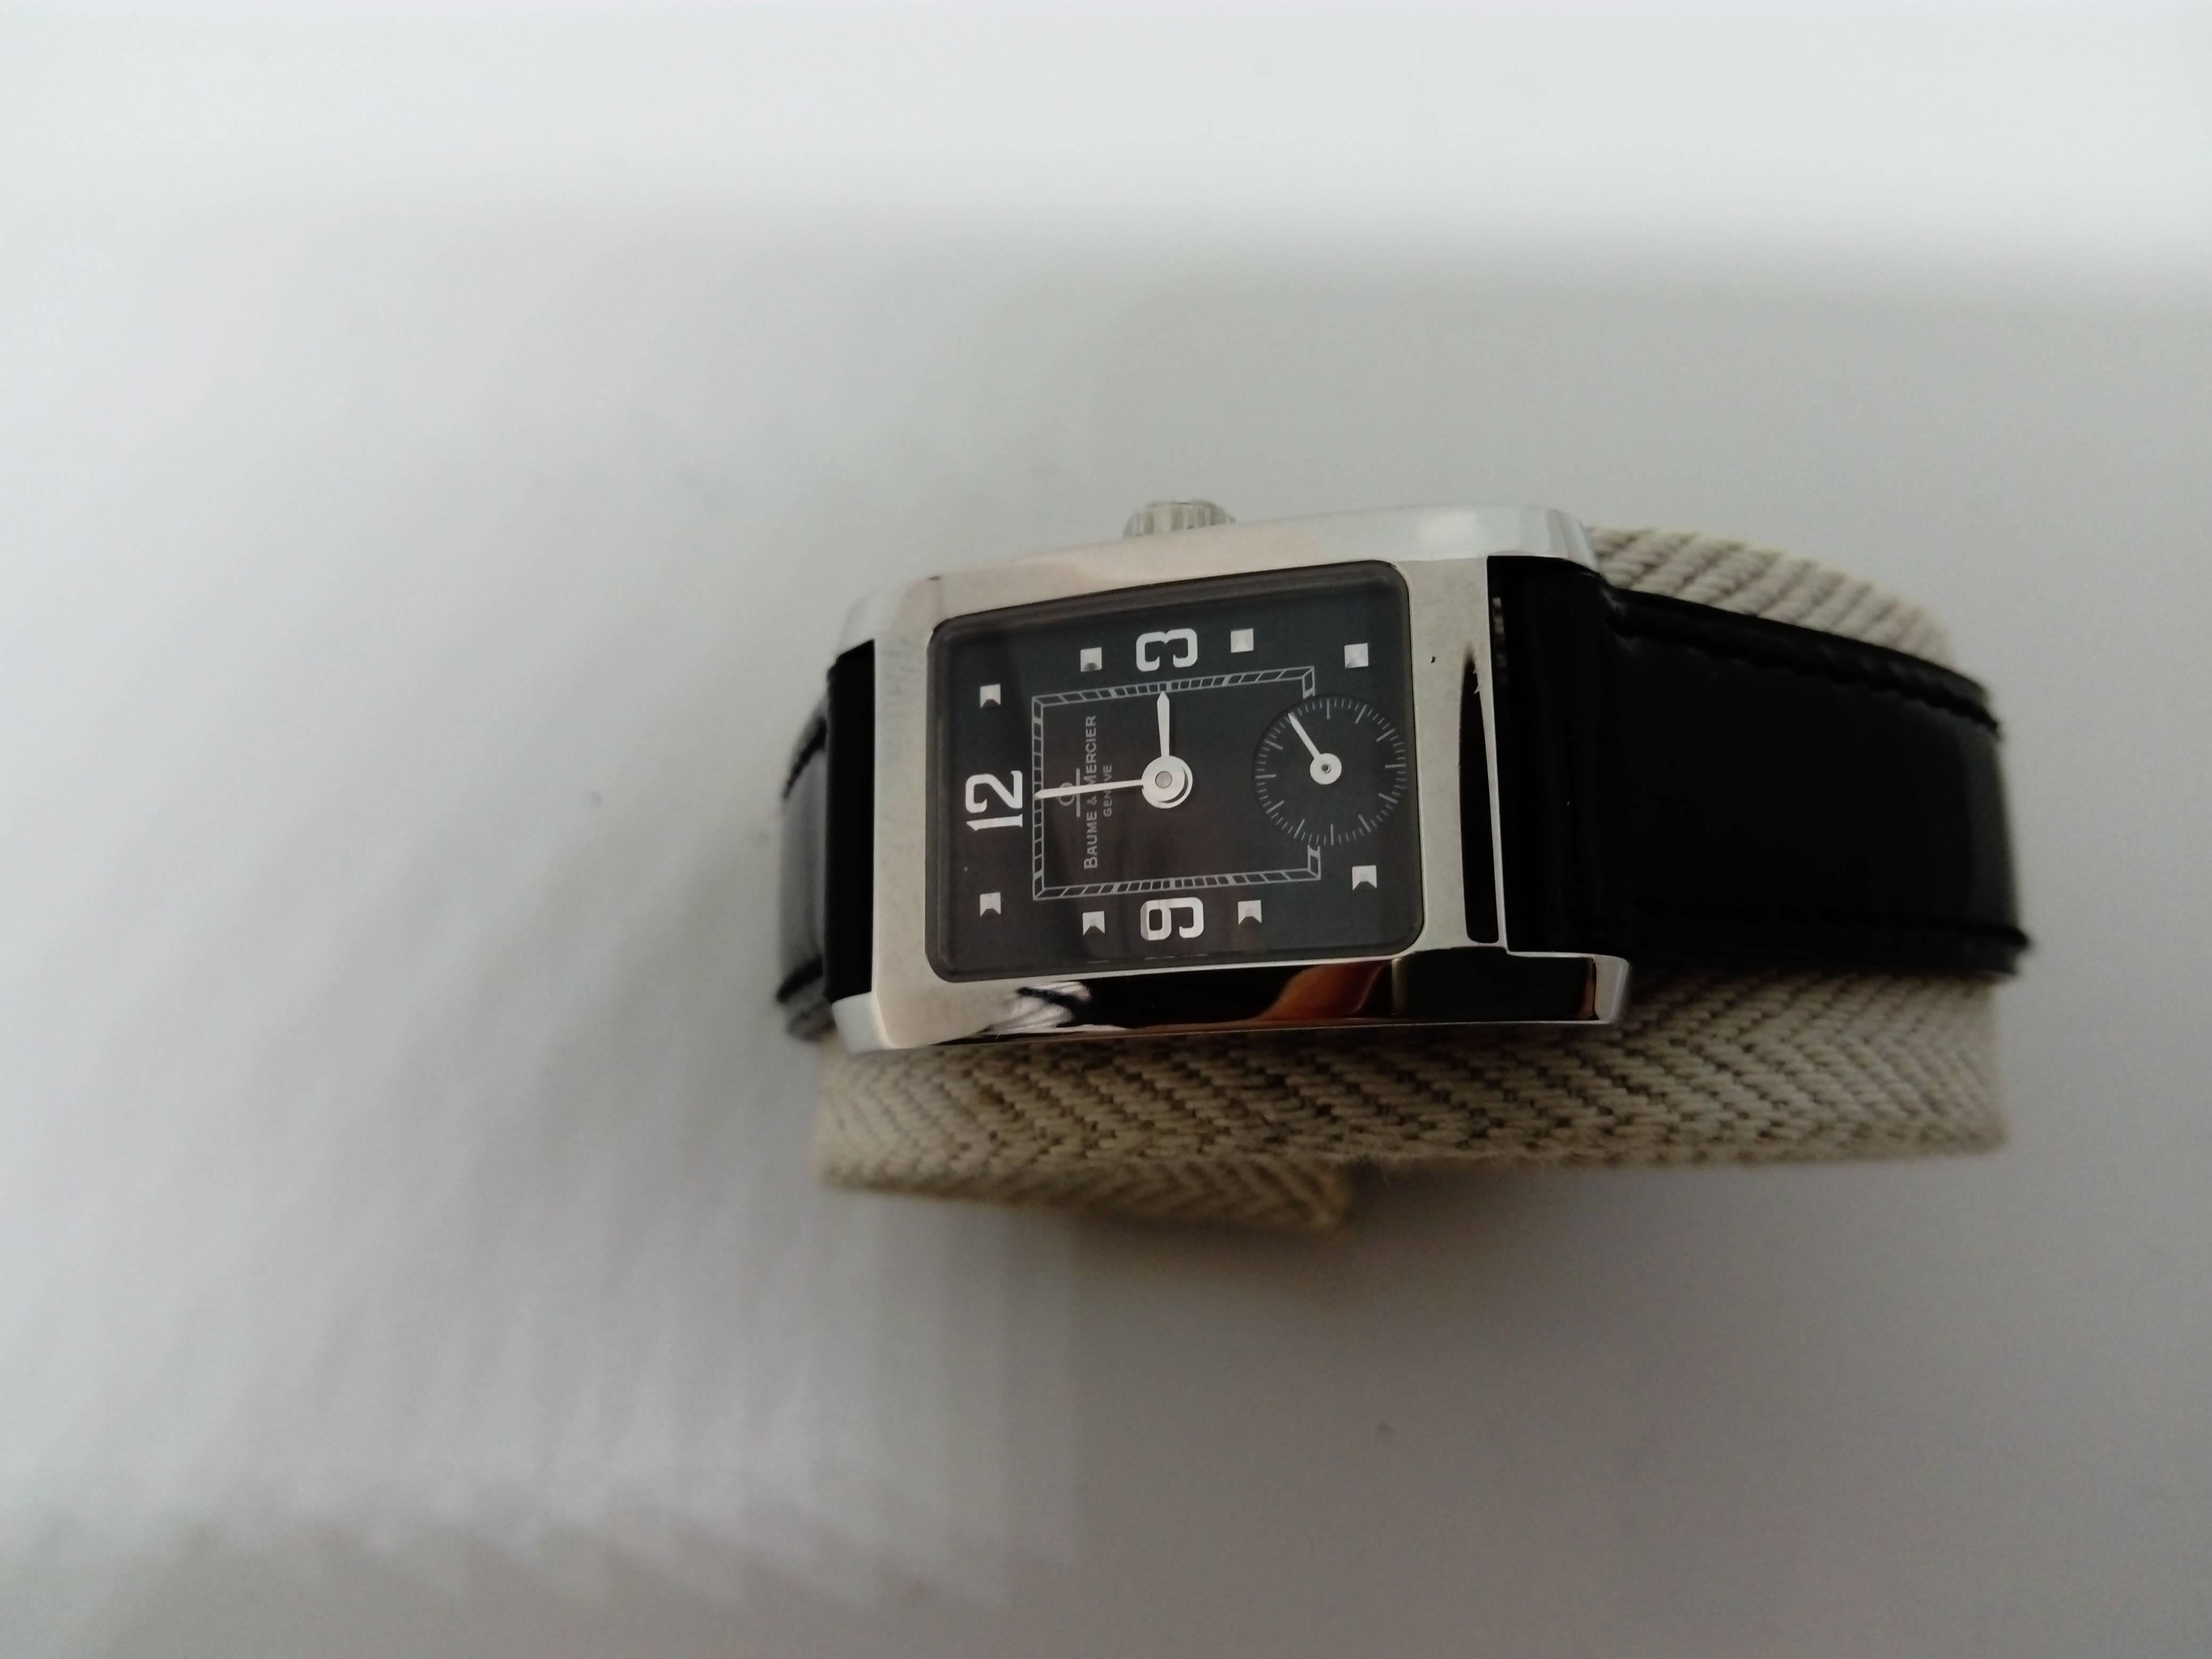 Balm and Mercier
Hampton Woman
Black dial, black patent leather strap. Quartz
20 x 28 mm
New from stock
1 year warranty